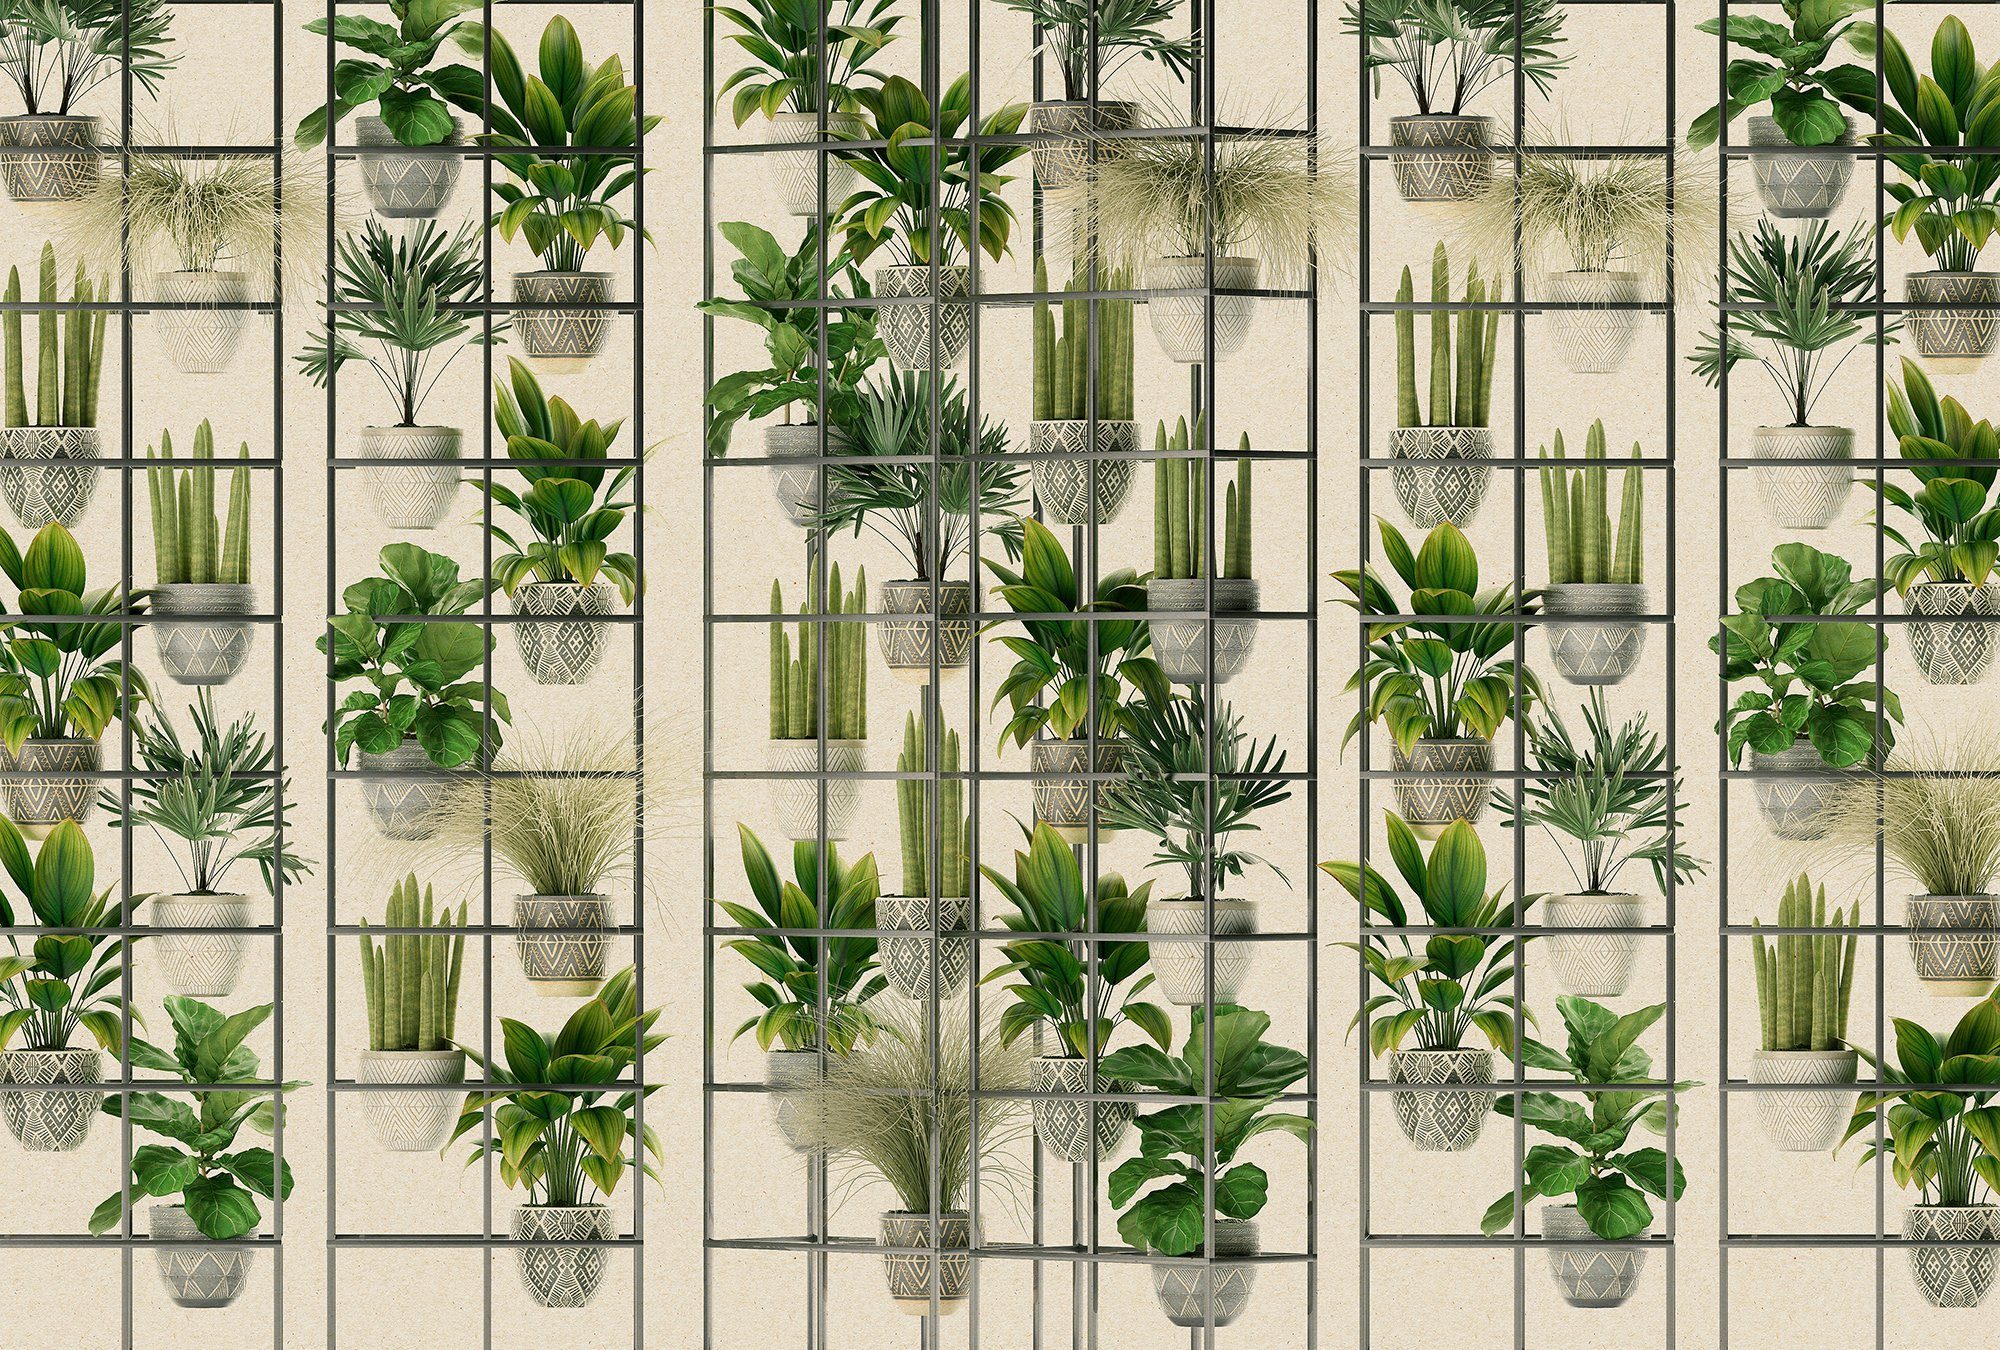 living walls Fototapete Walls by Patel Plant Shop, glatt, Vlies, Wand grün-beige